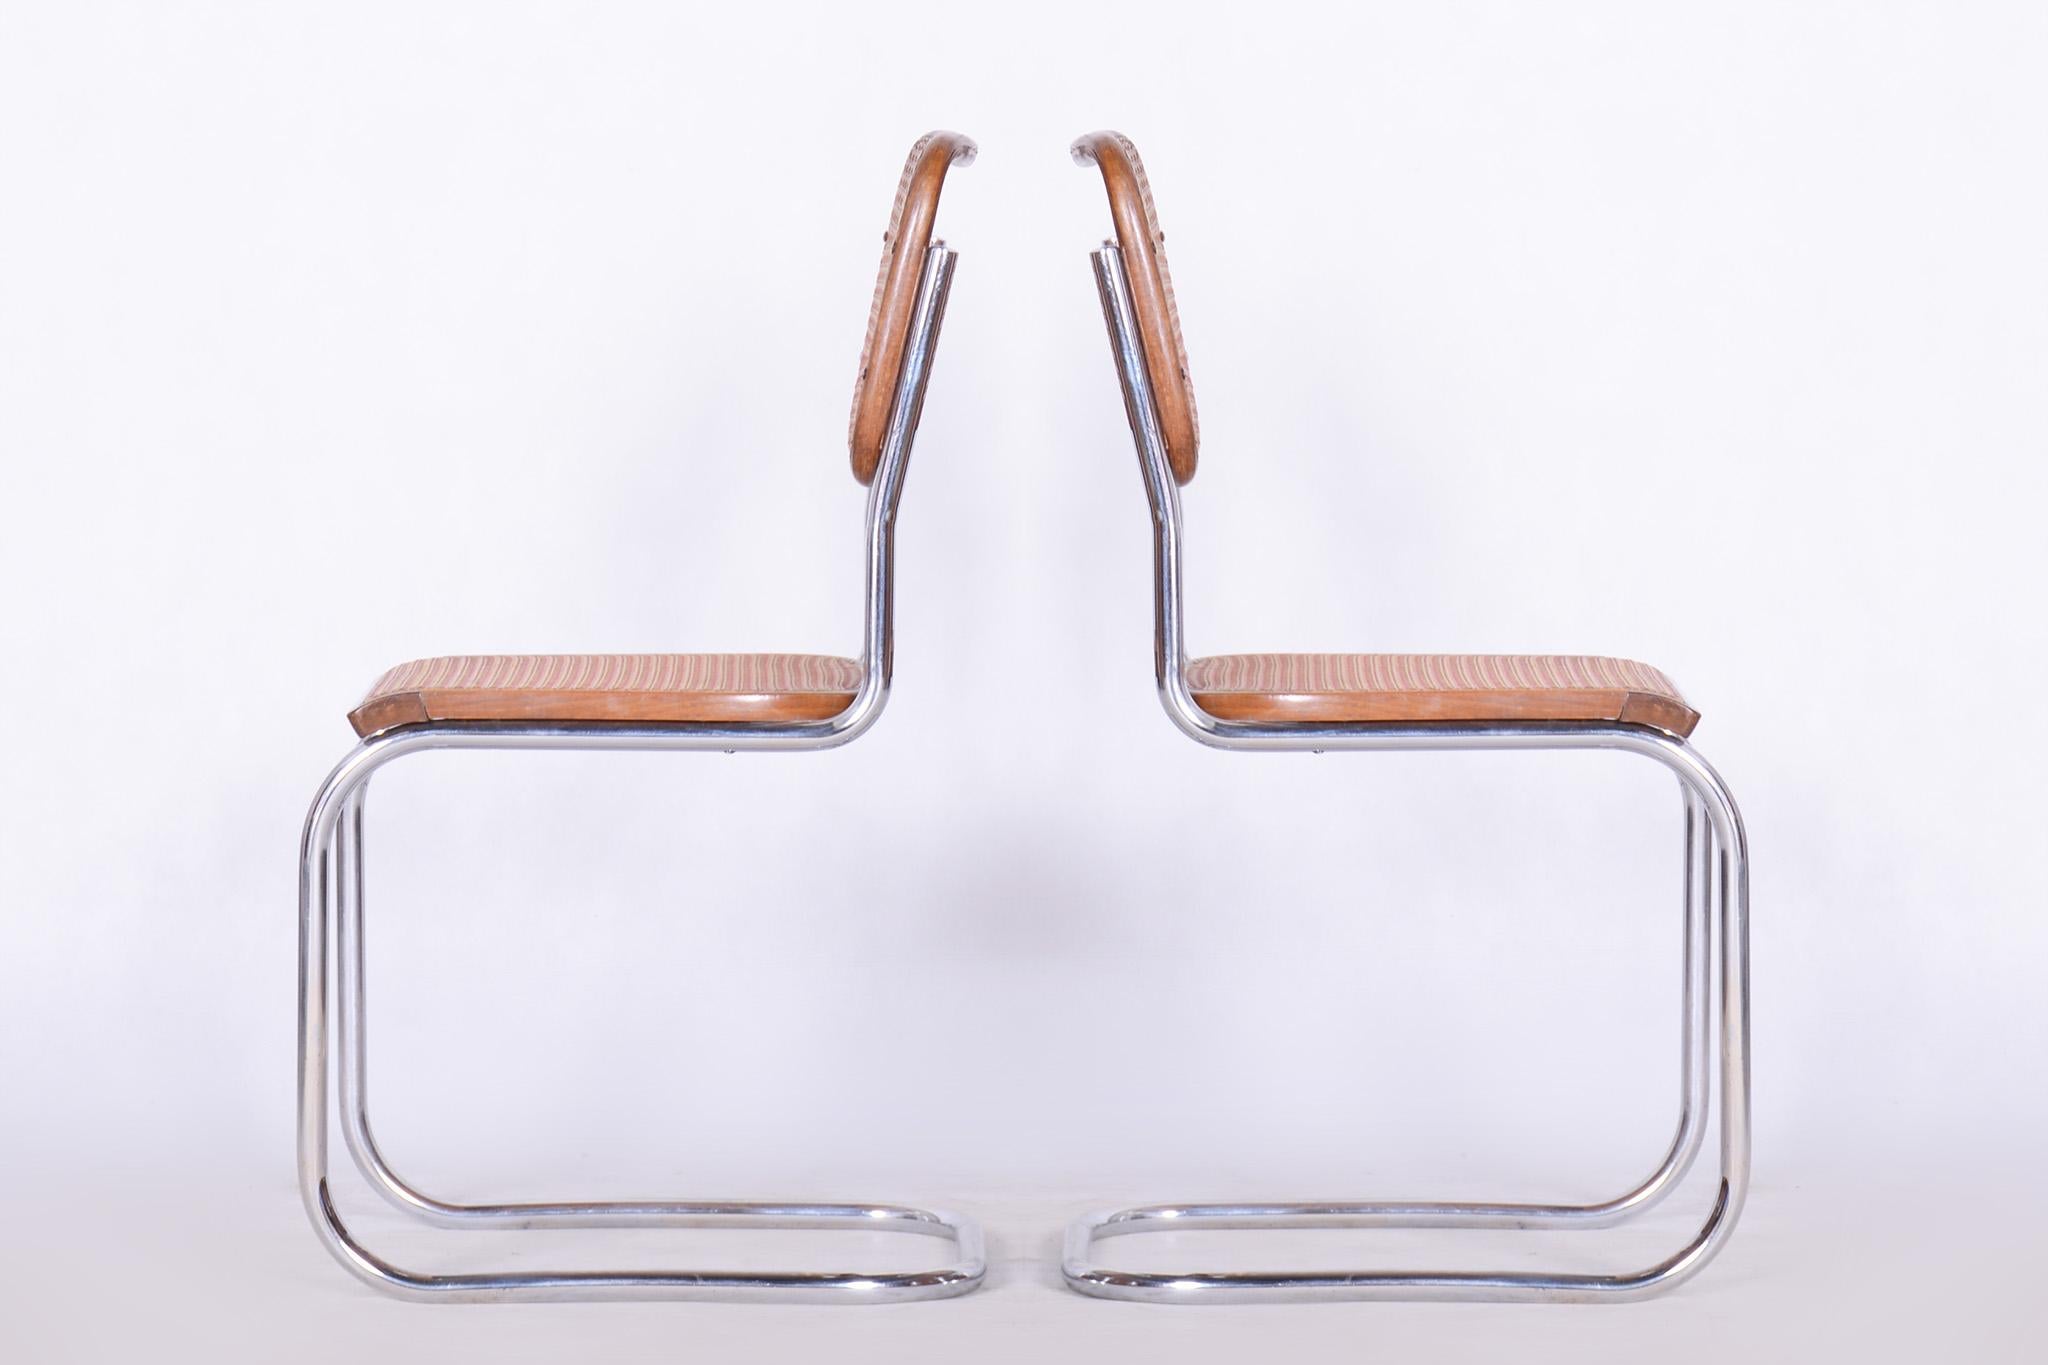 Restored Bauhaus Pair of Chairs, Robert Slezak, Chrome, Beech, Czechia, 1930s For Sale 2